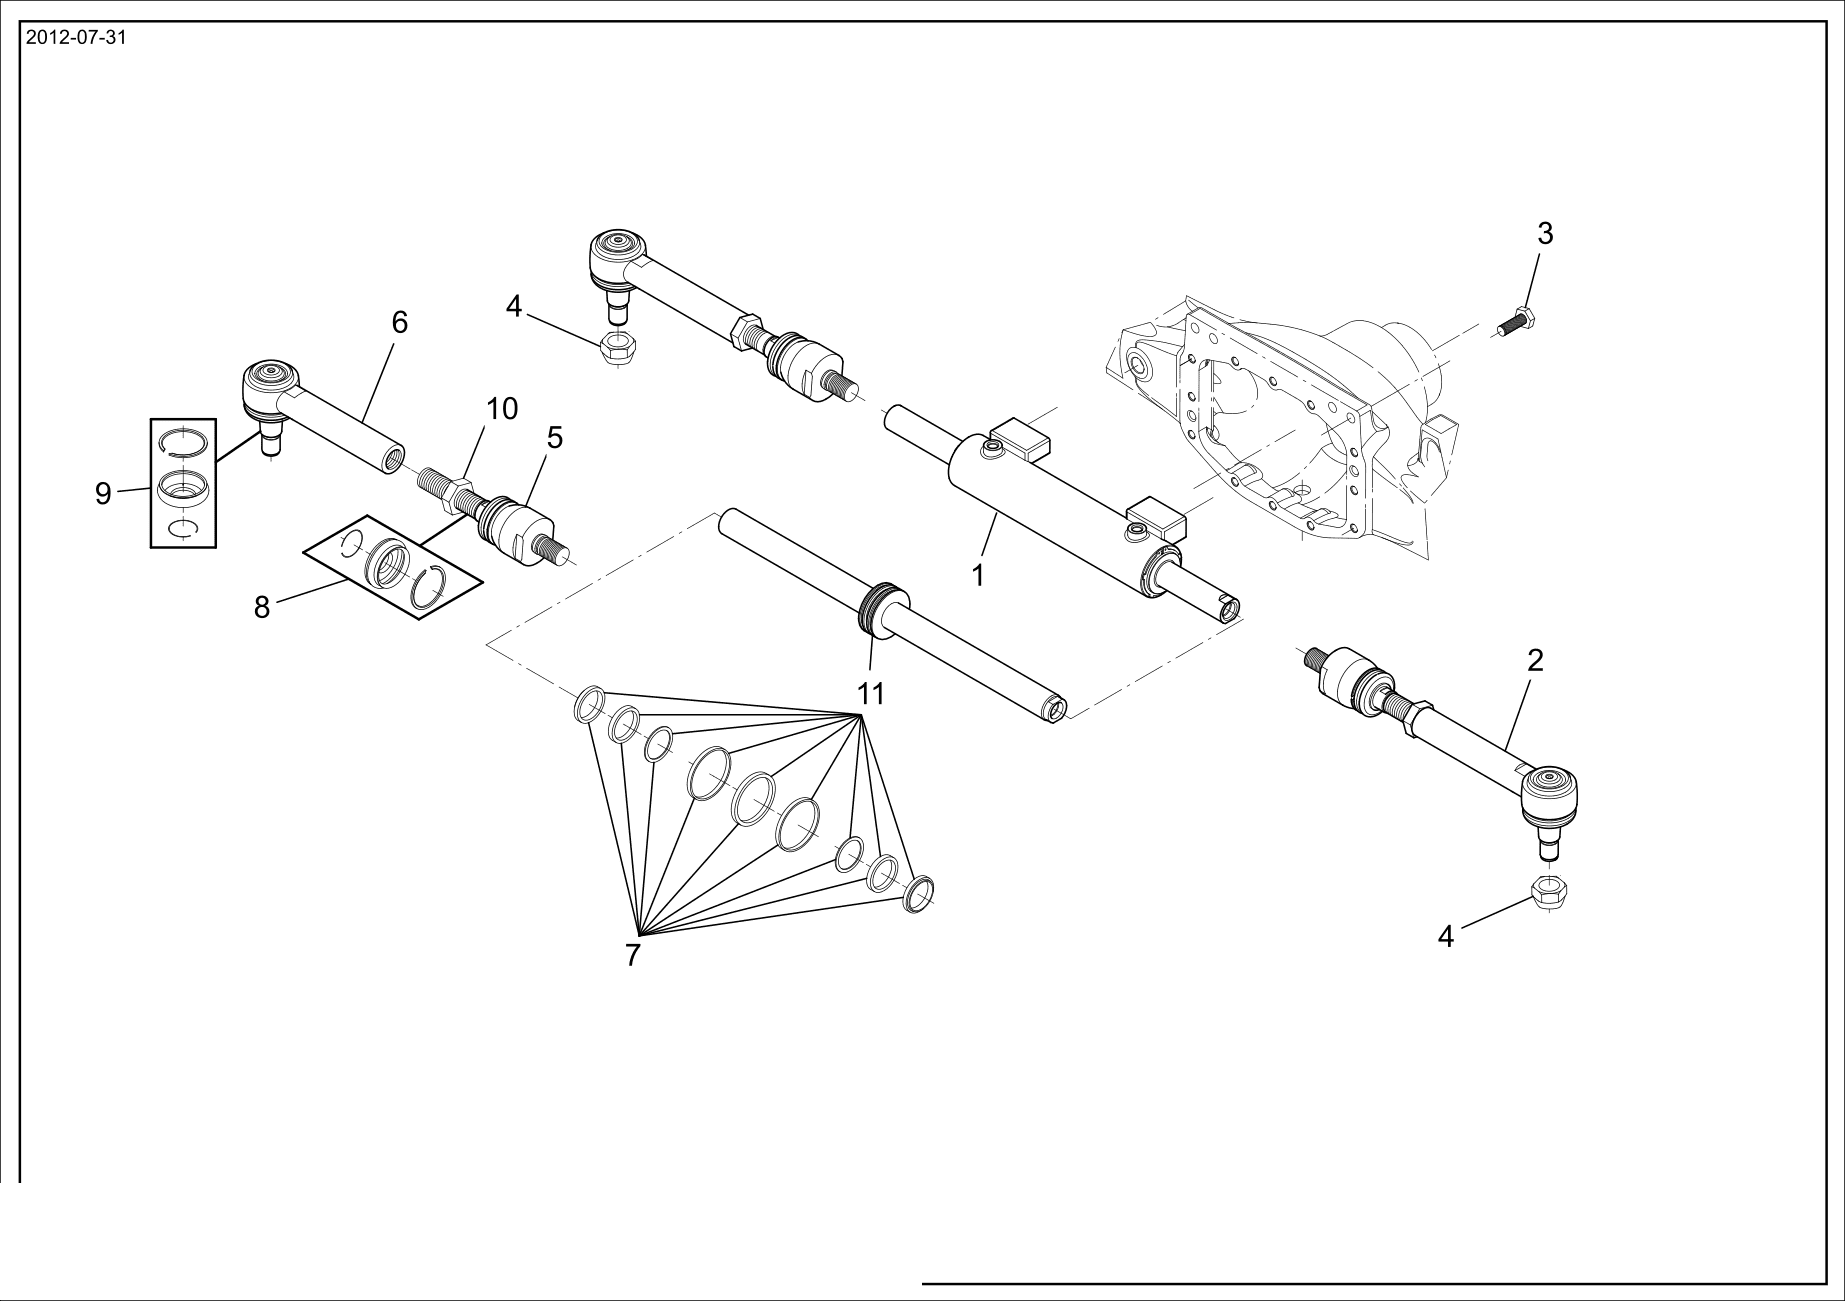 drawing for ERKUNT Y01196 - ARTICULATED TIE ROD (figure 1)